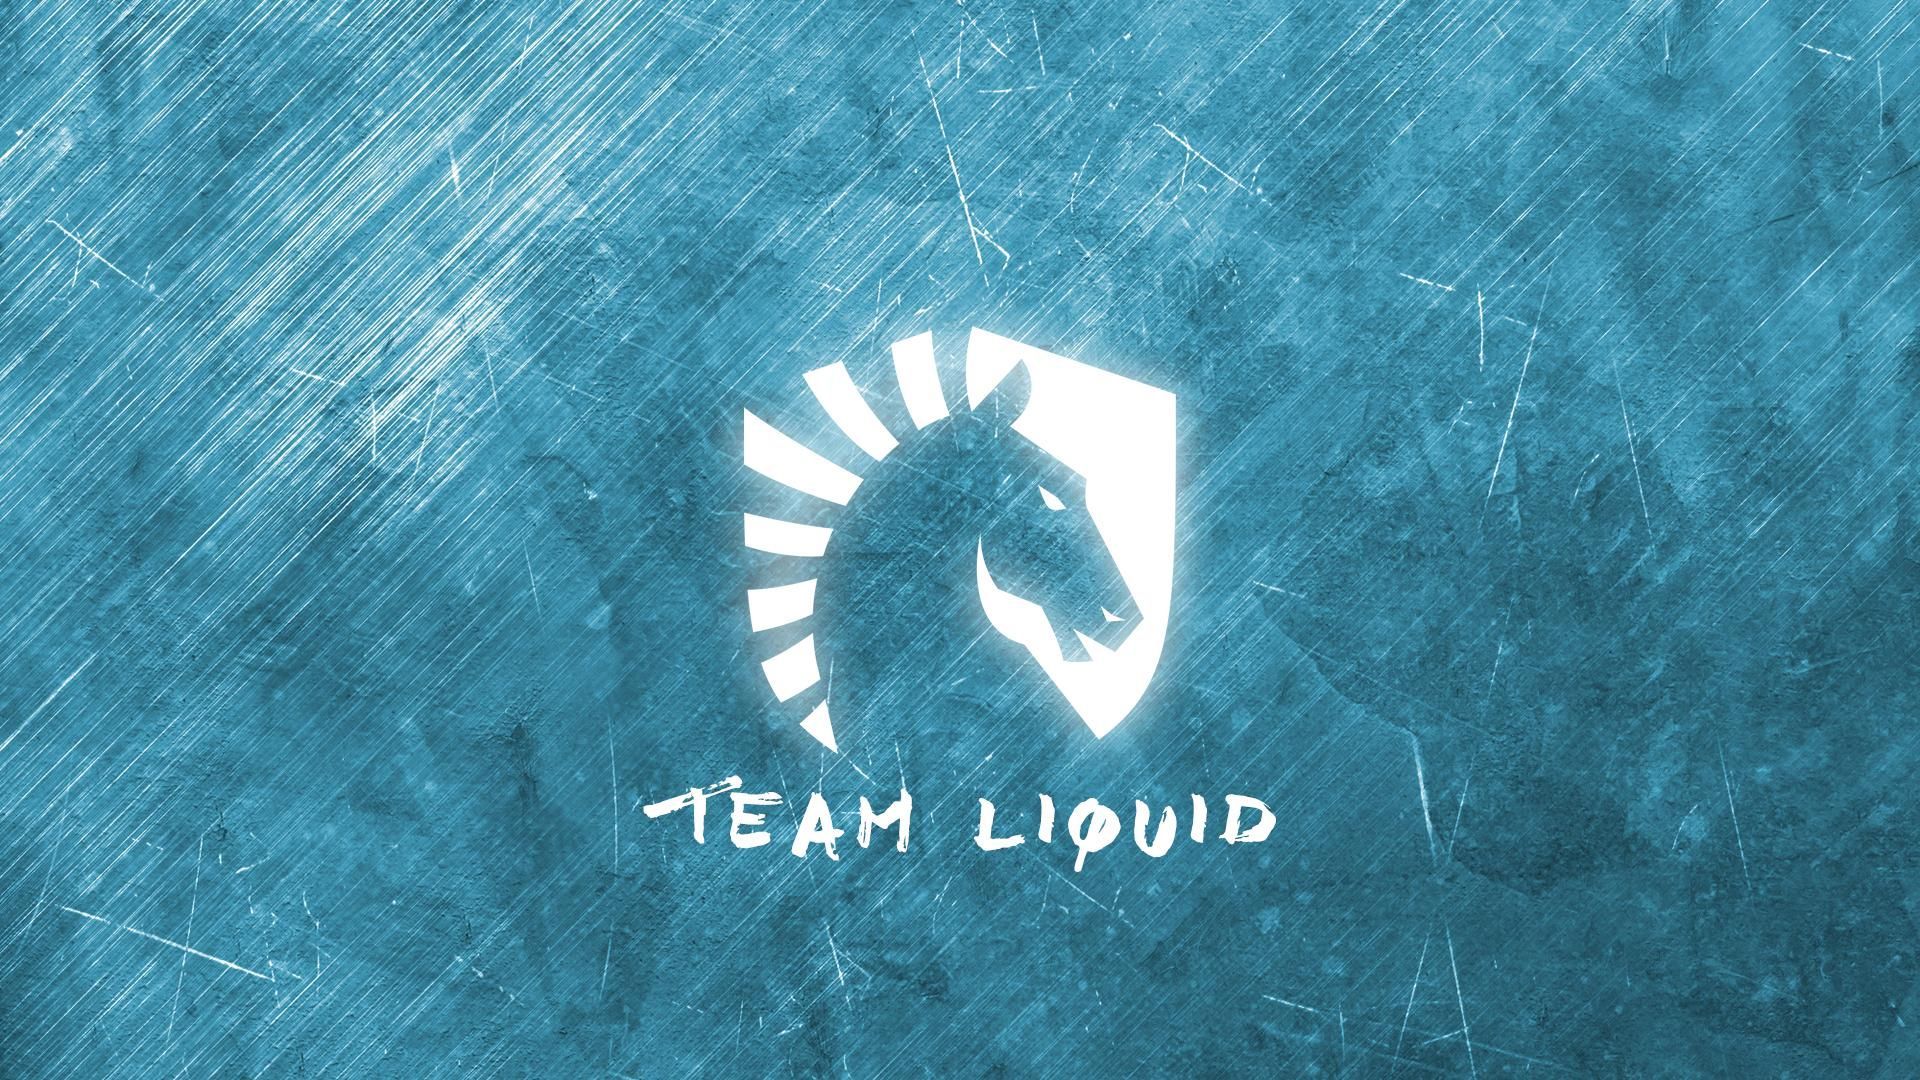 Don’t miss the new team liquid